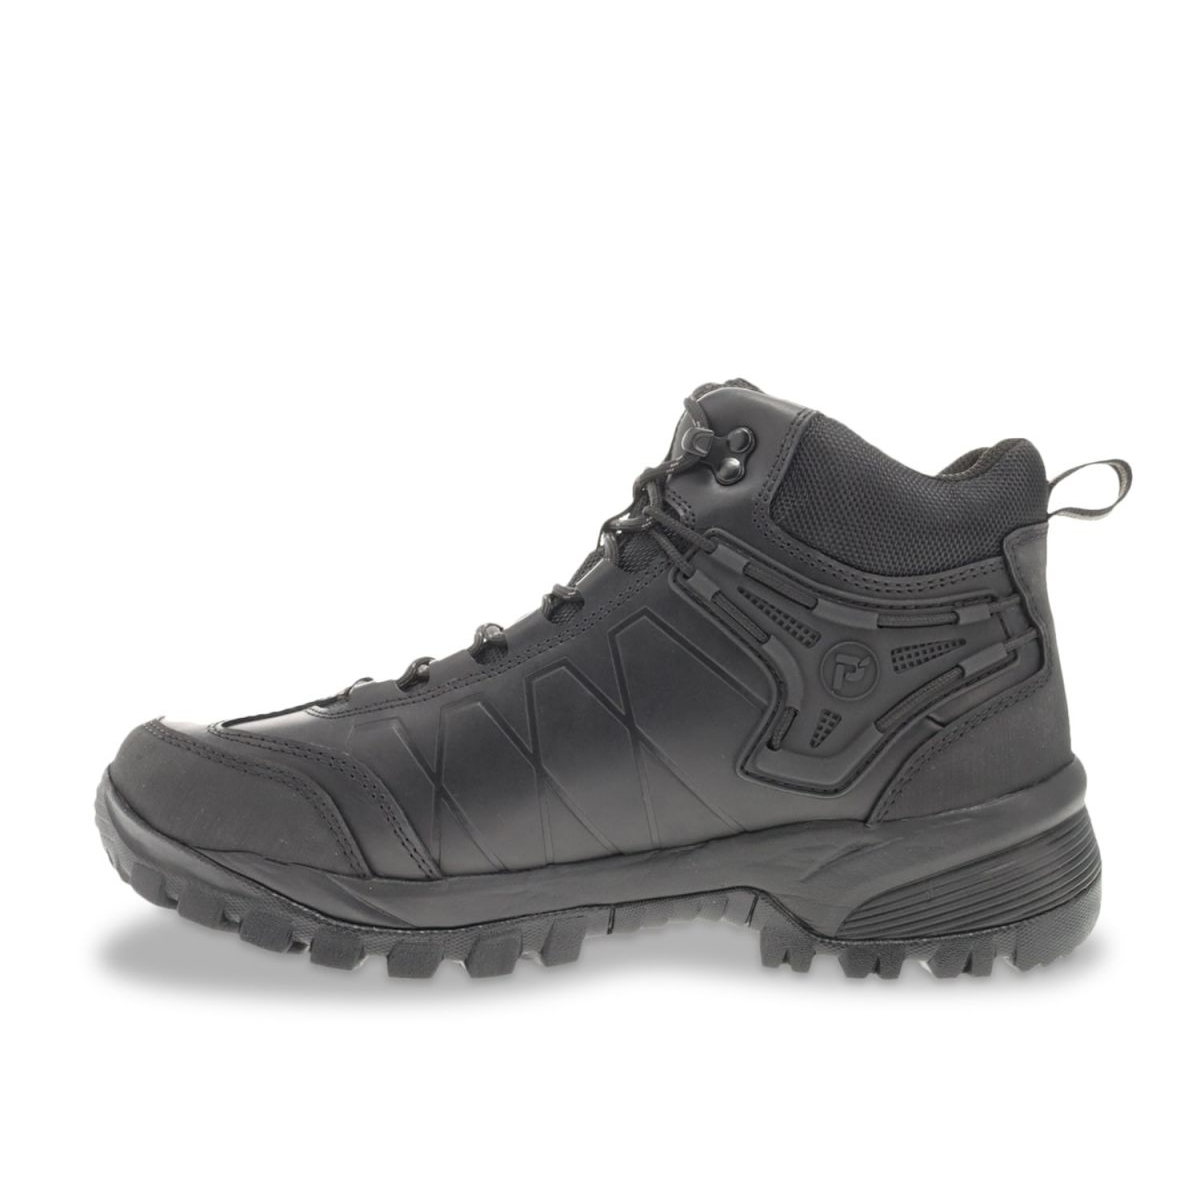 Propet Men's Ridge Walker Force Hiking Boots Black - MBA052LBLK BLACK - BLACK, 8